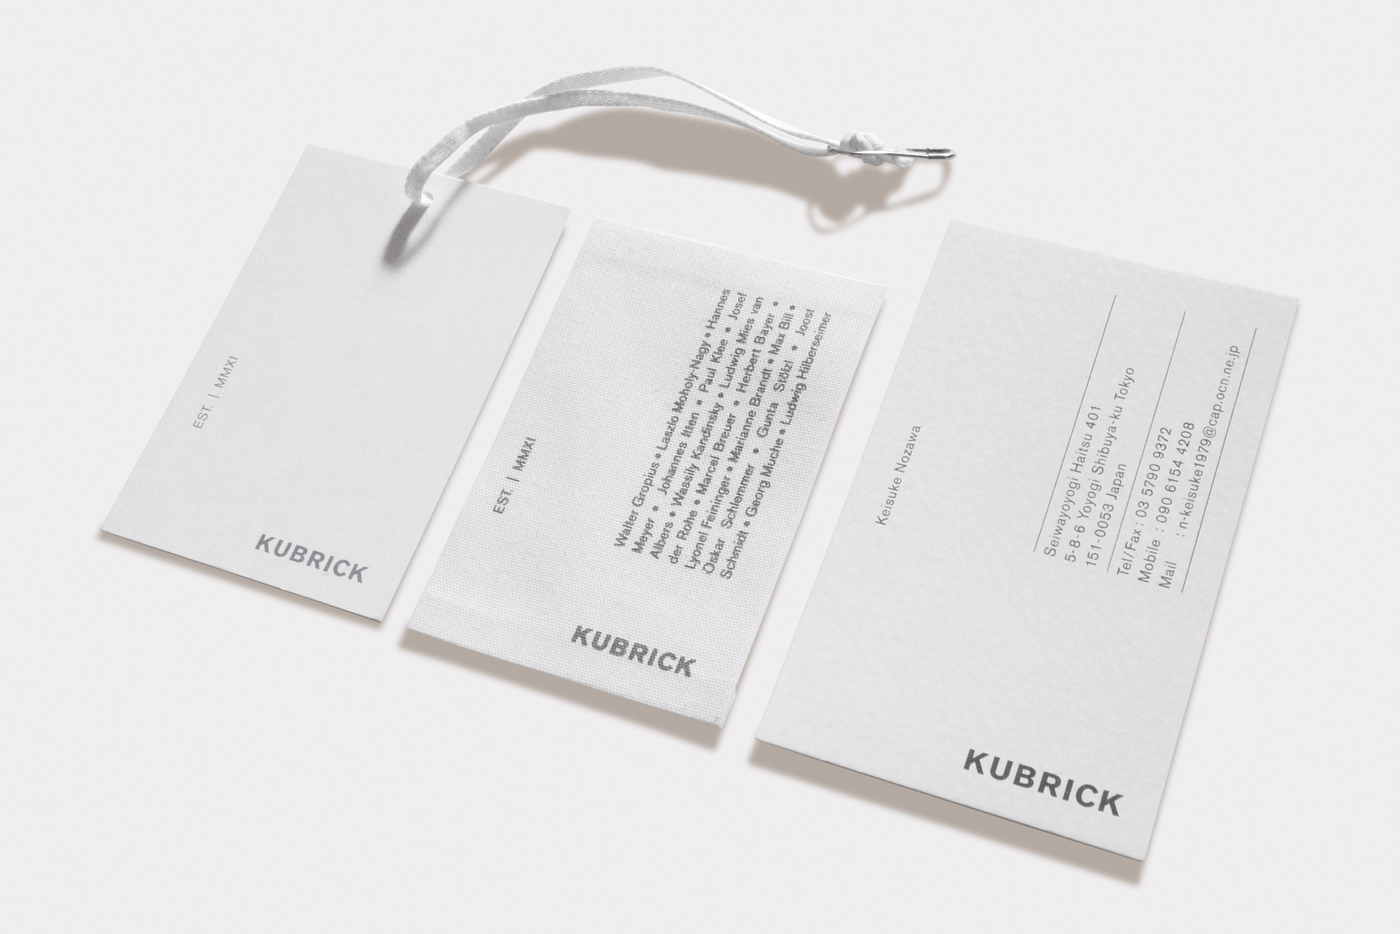 Kubrick Invitation studio newwork newwork newwork magazine new work New York